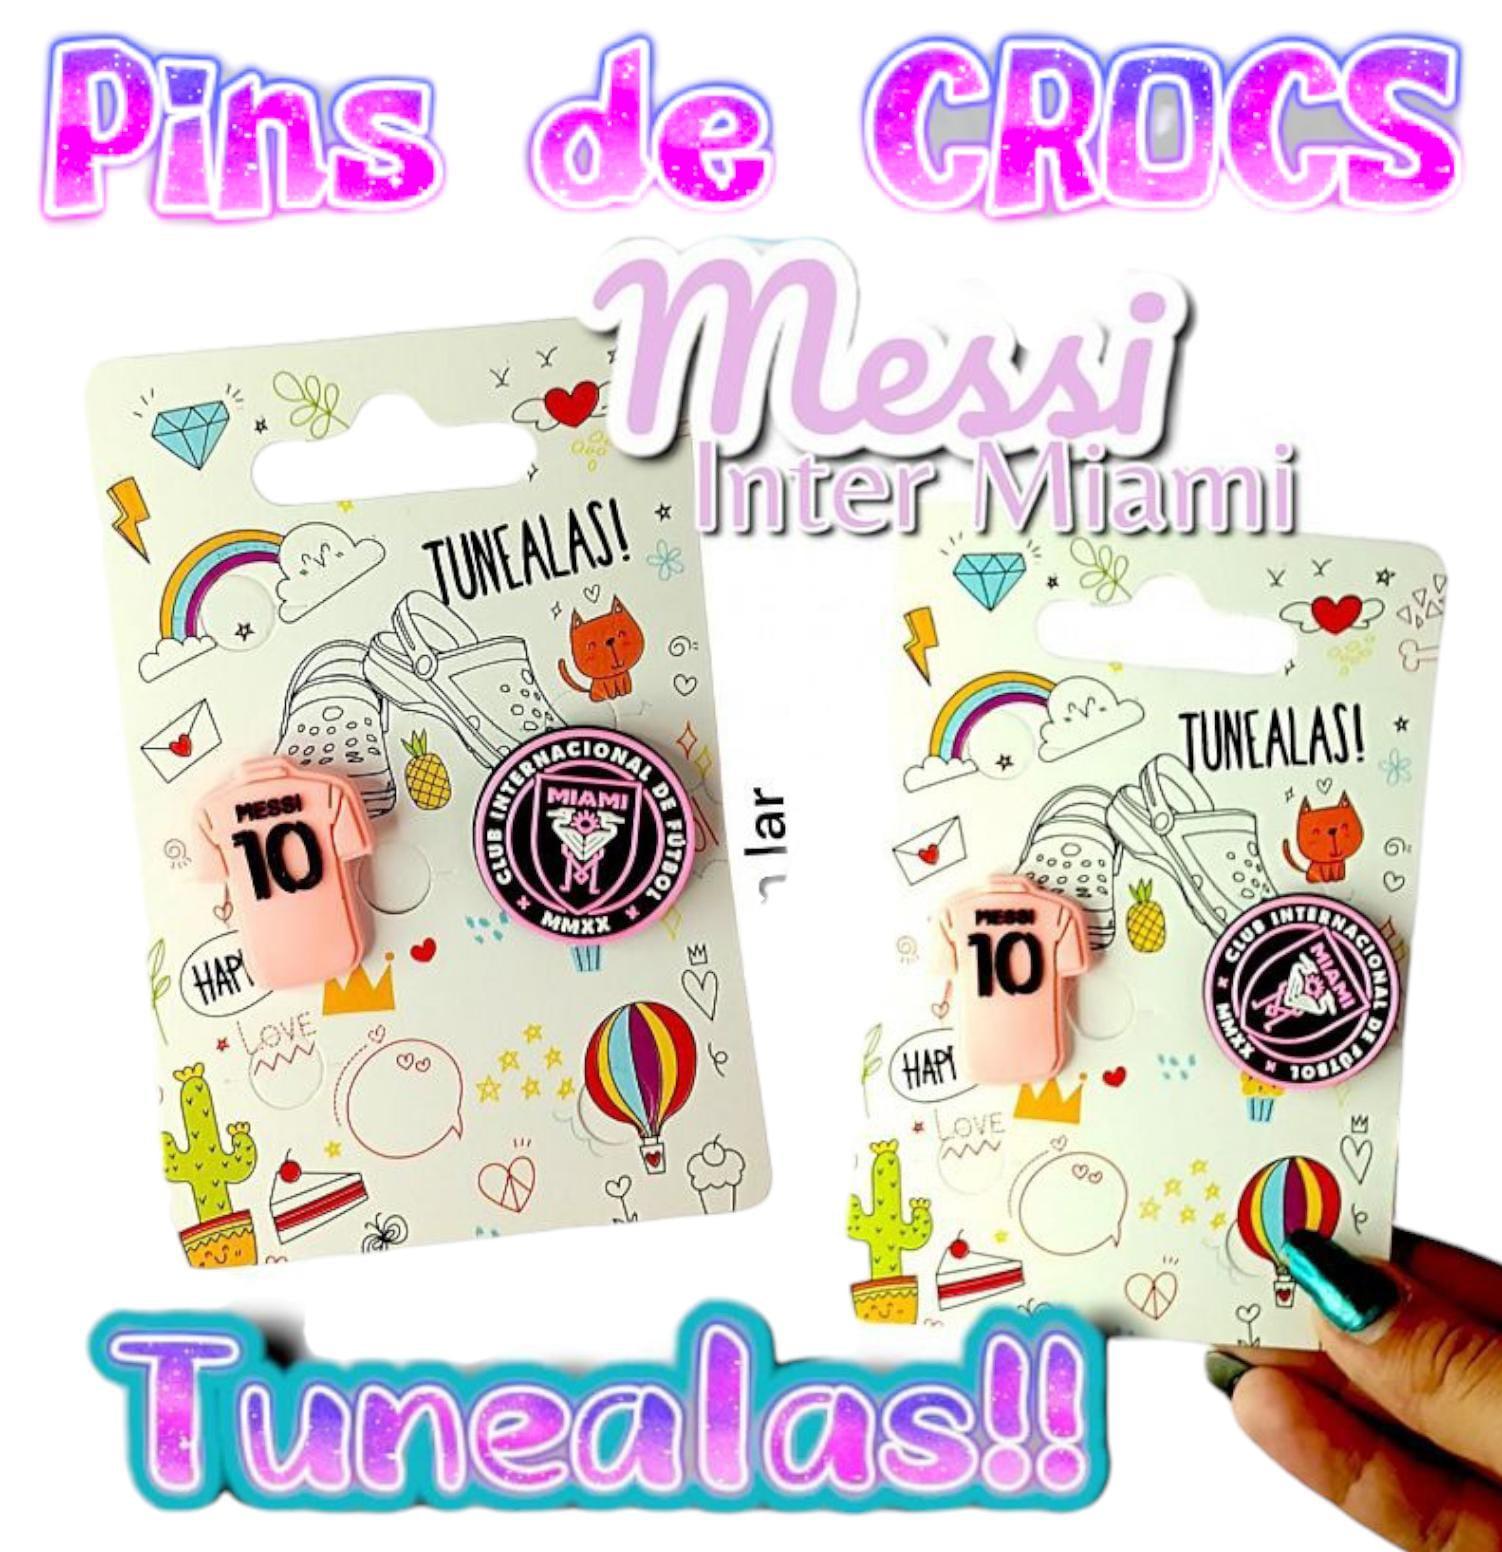 Pins de Crocs MESSI INTER MIAMI (TUNEALAS)